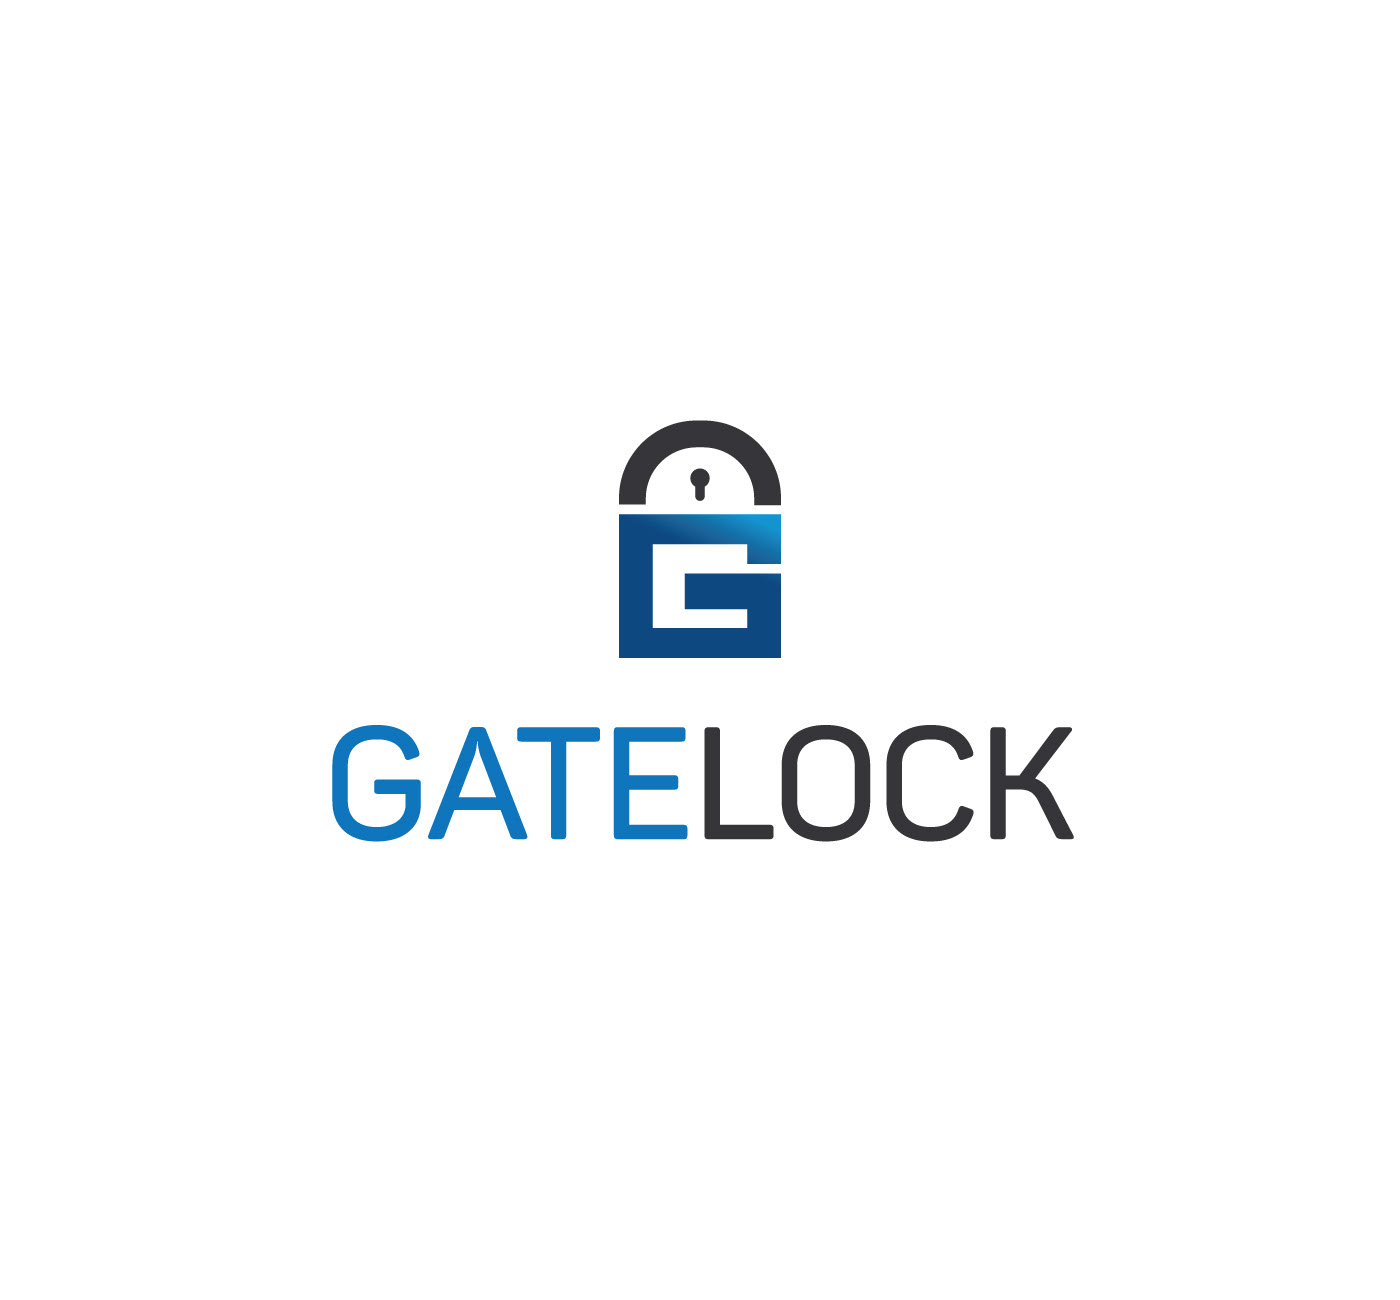 company logo design gate gate logo gate logo design lock lock logo lock logo design logo Logo Design